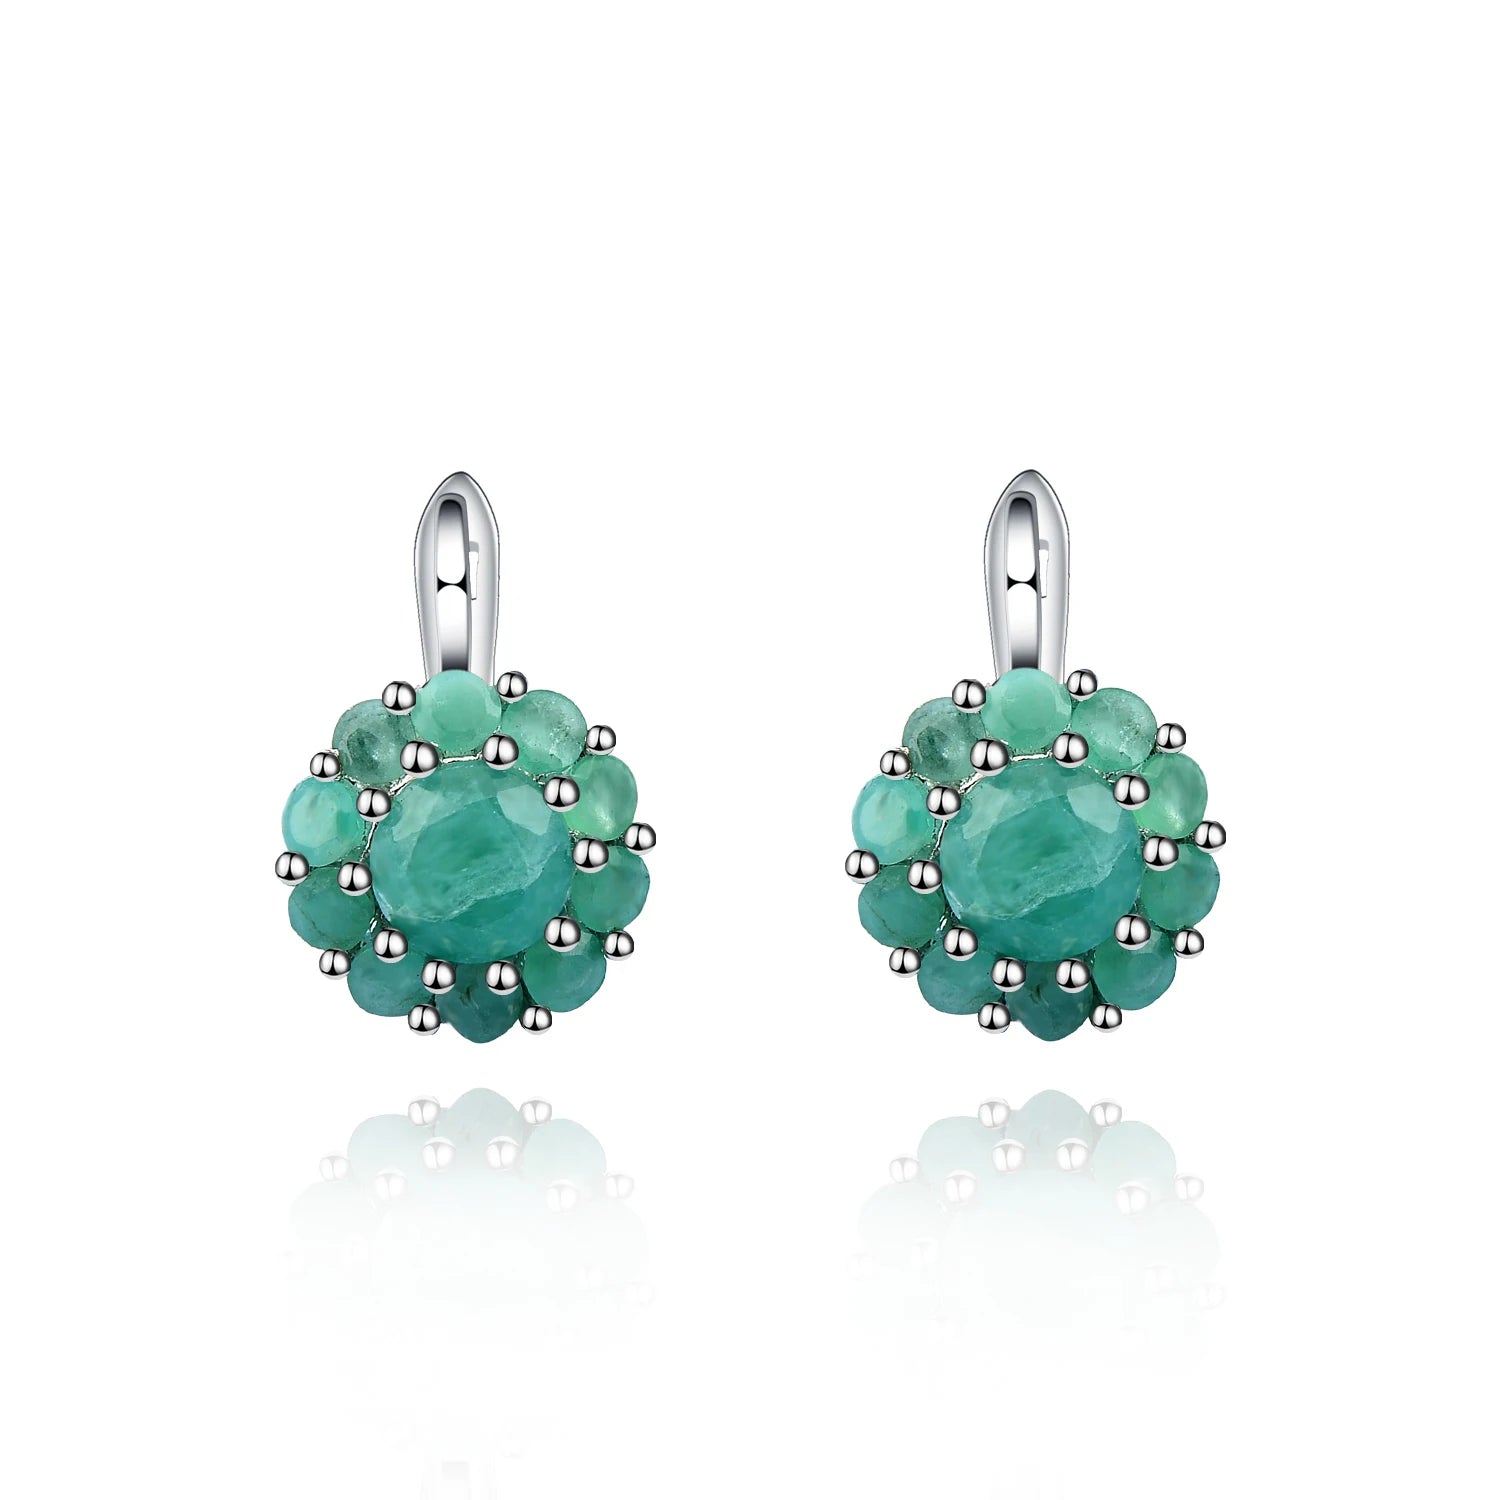 GEM'S BALLET Quartz Jewelry Gemstone Clip Earrings Iolite Blue Mystic Quartz Statement Earrings in Sterling Silver Gift For Her Emerald 925 Sterling Silver